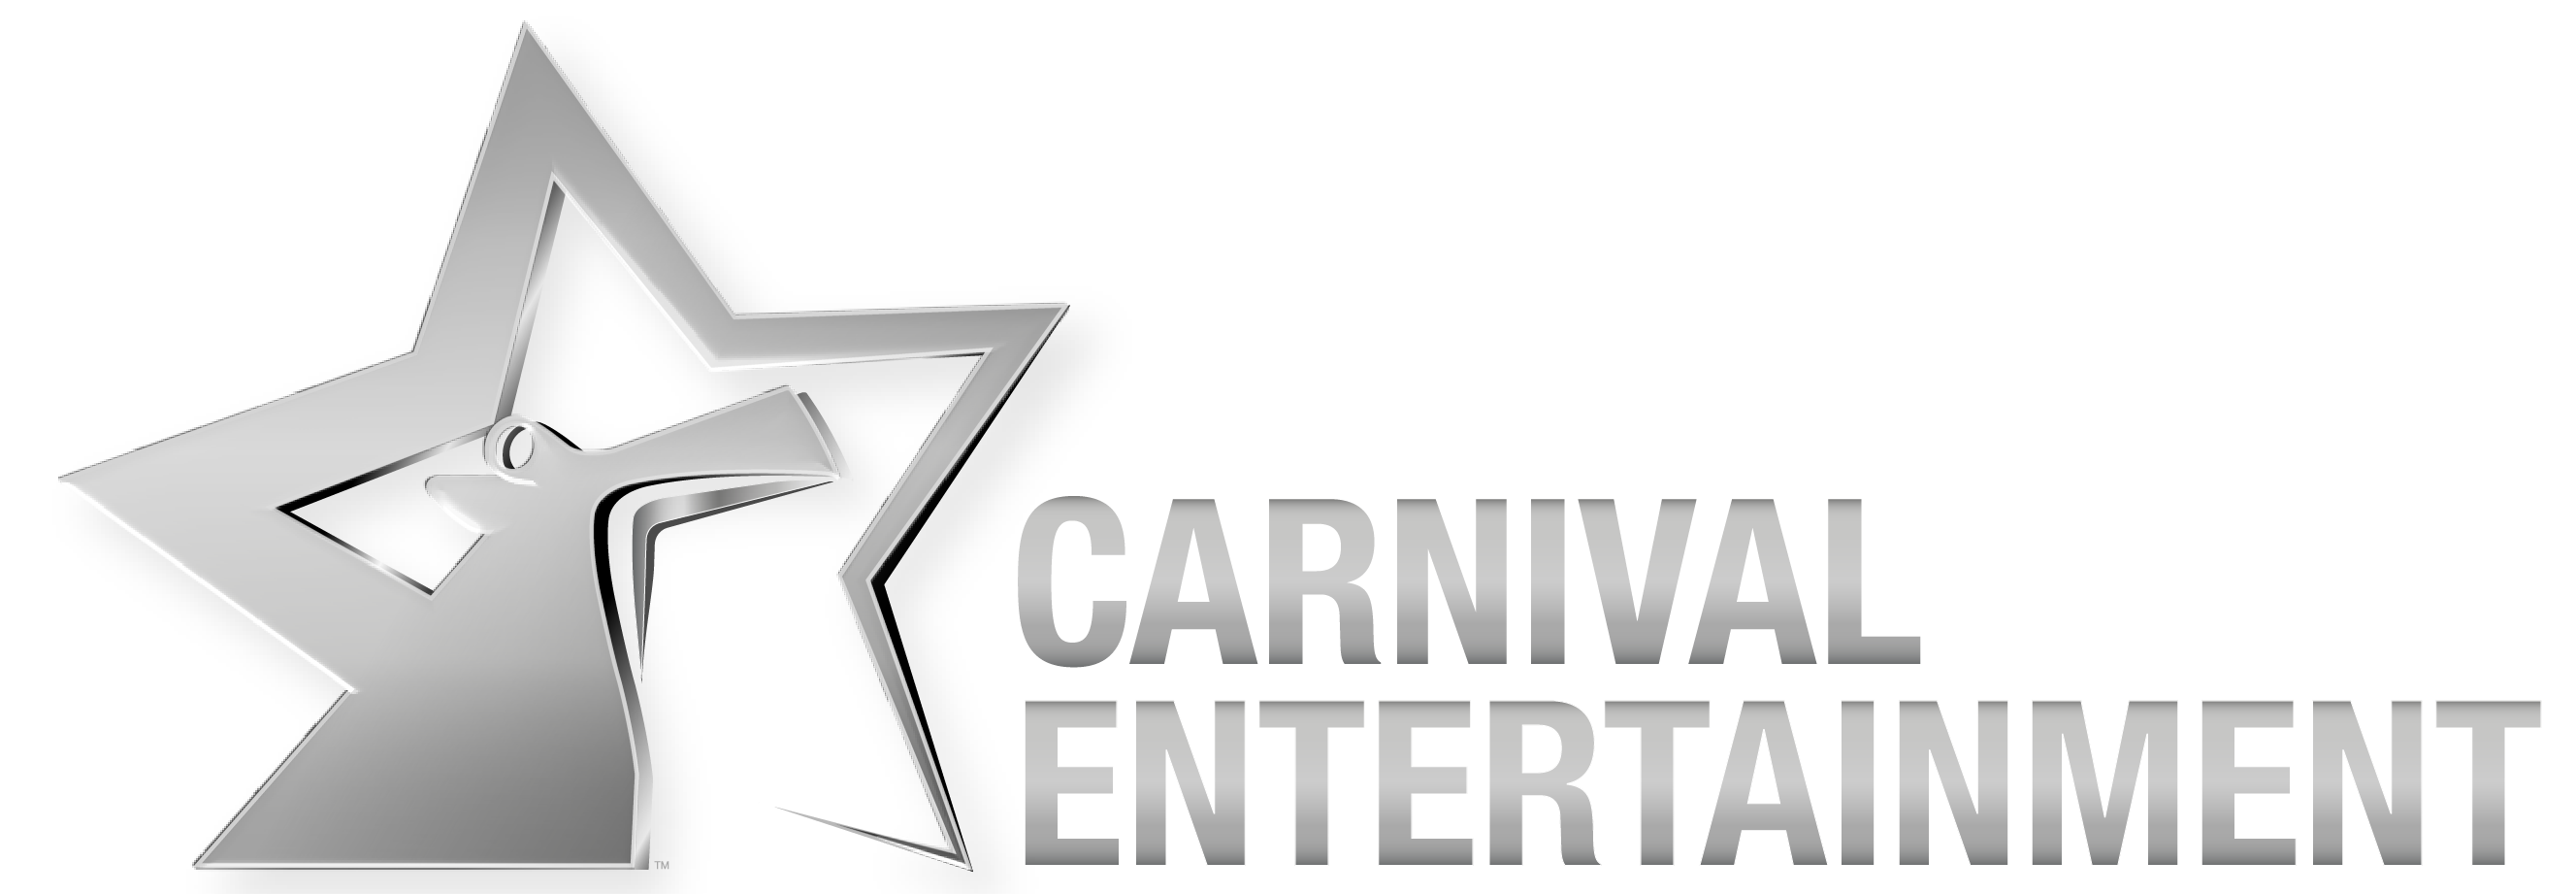 carnival cruise jobs entertainment